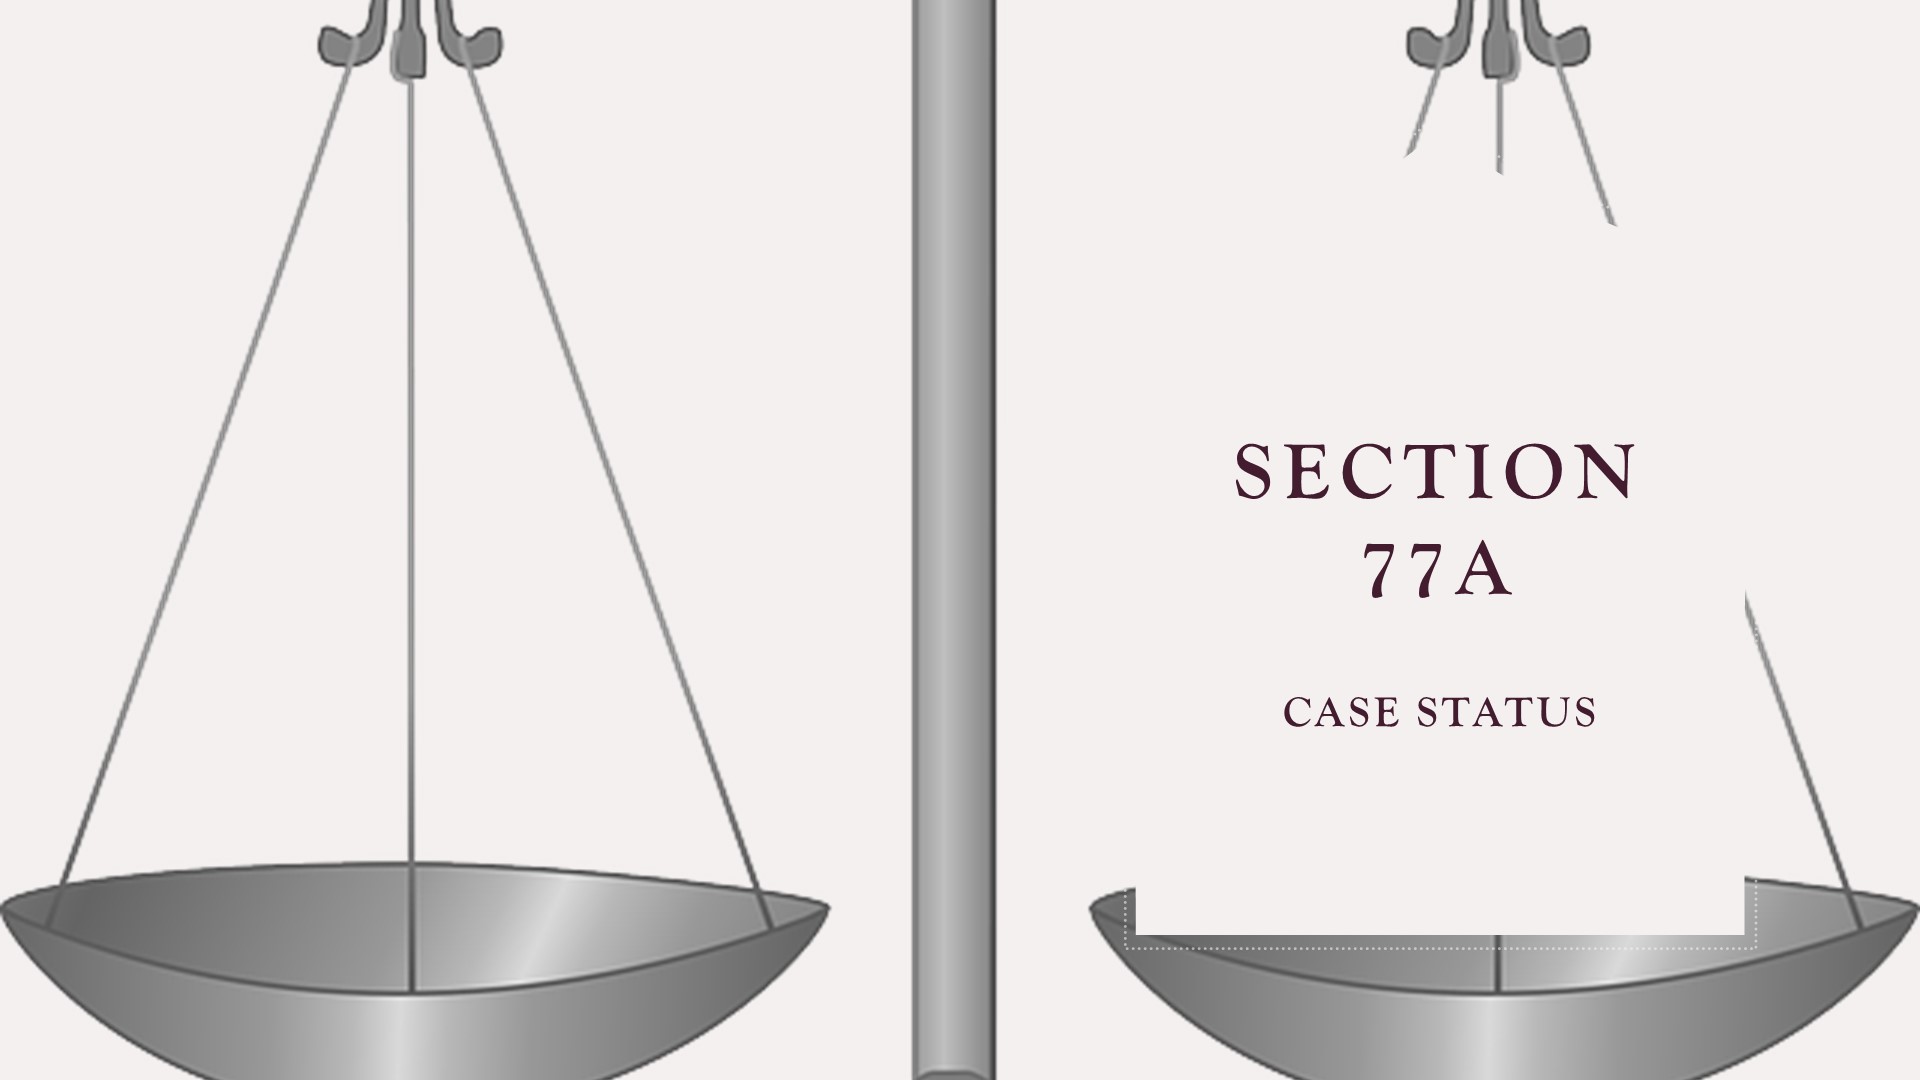 Sec 77A: Case Status & Key Issues